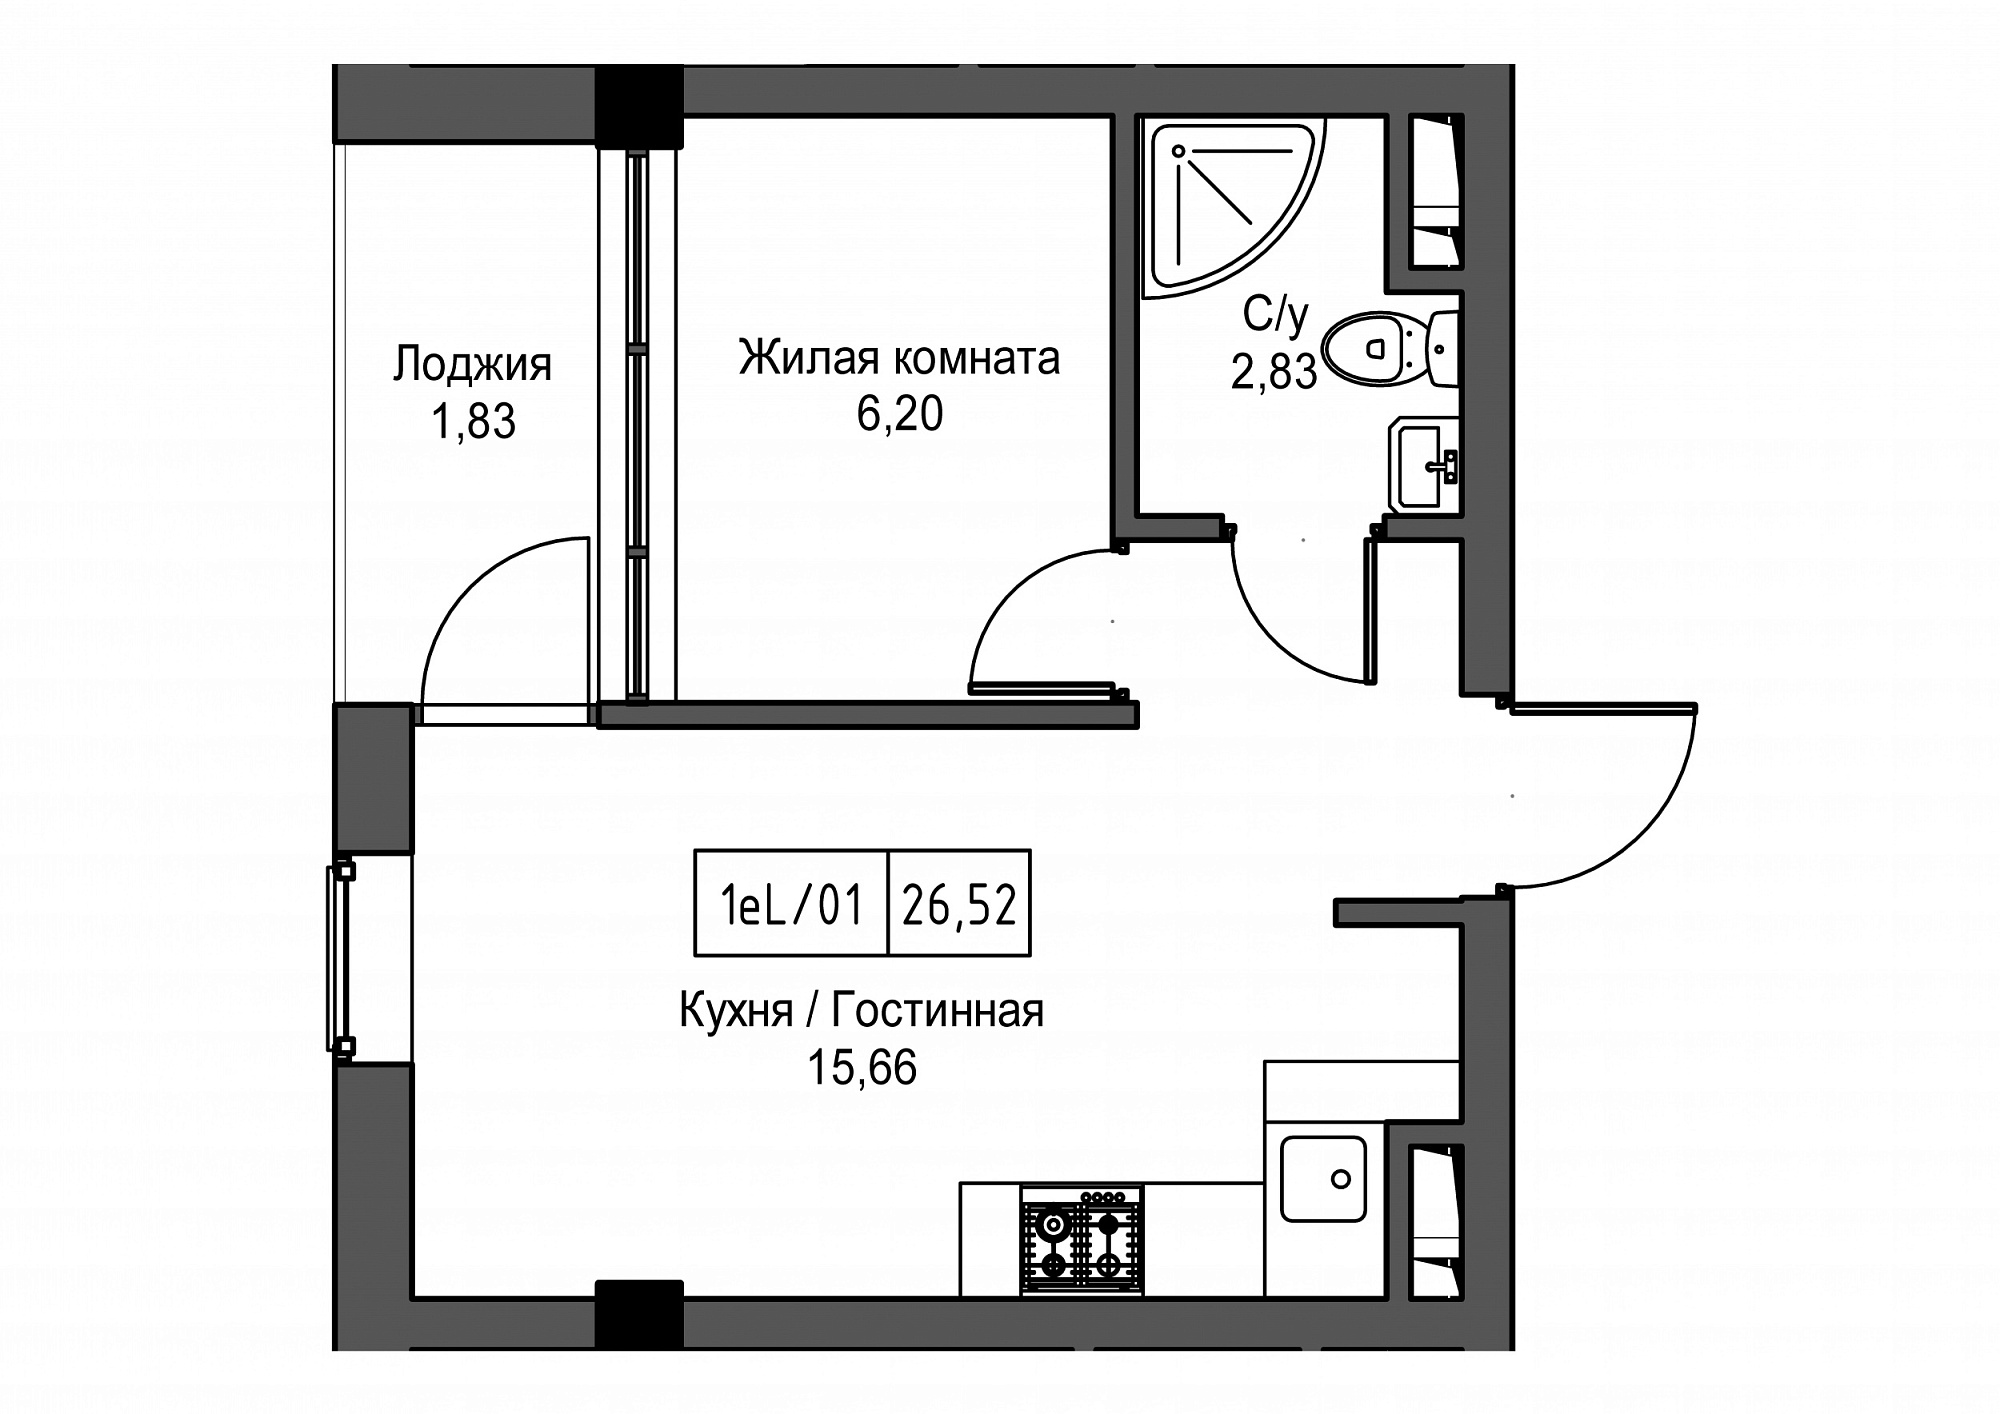 Планування 1-к квартира площею 26.52м2, UM-002-02/0099.